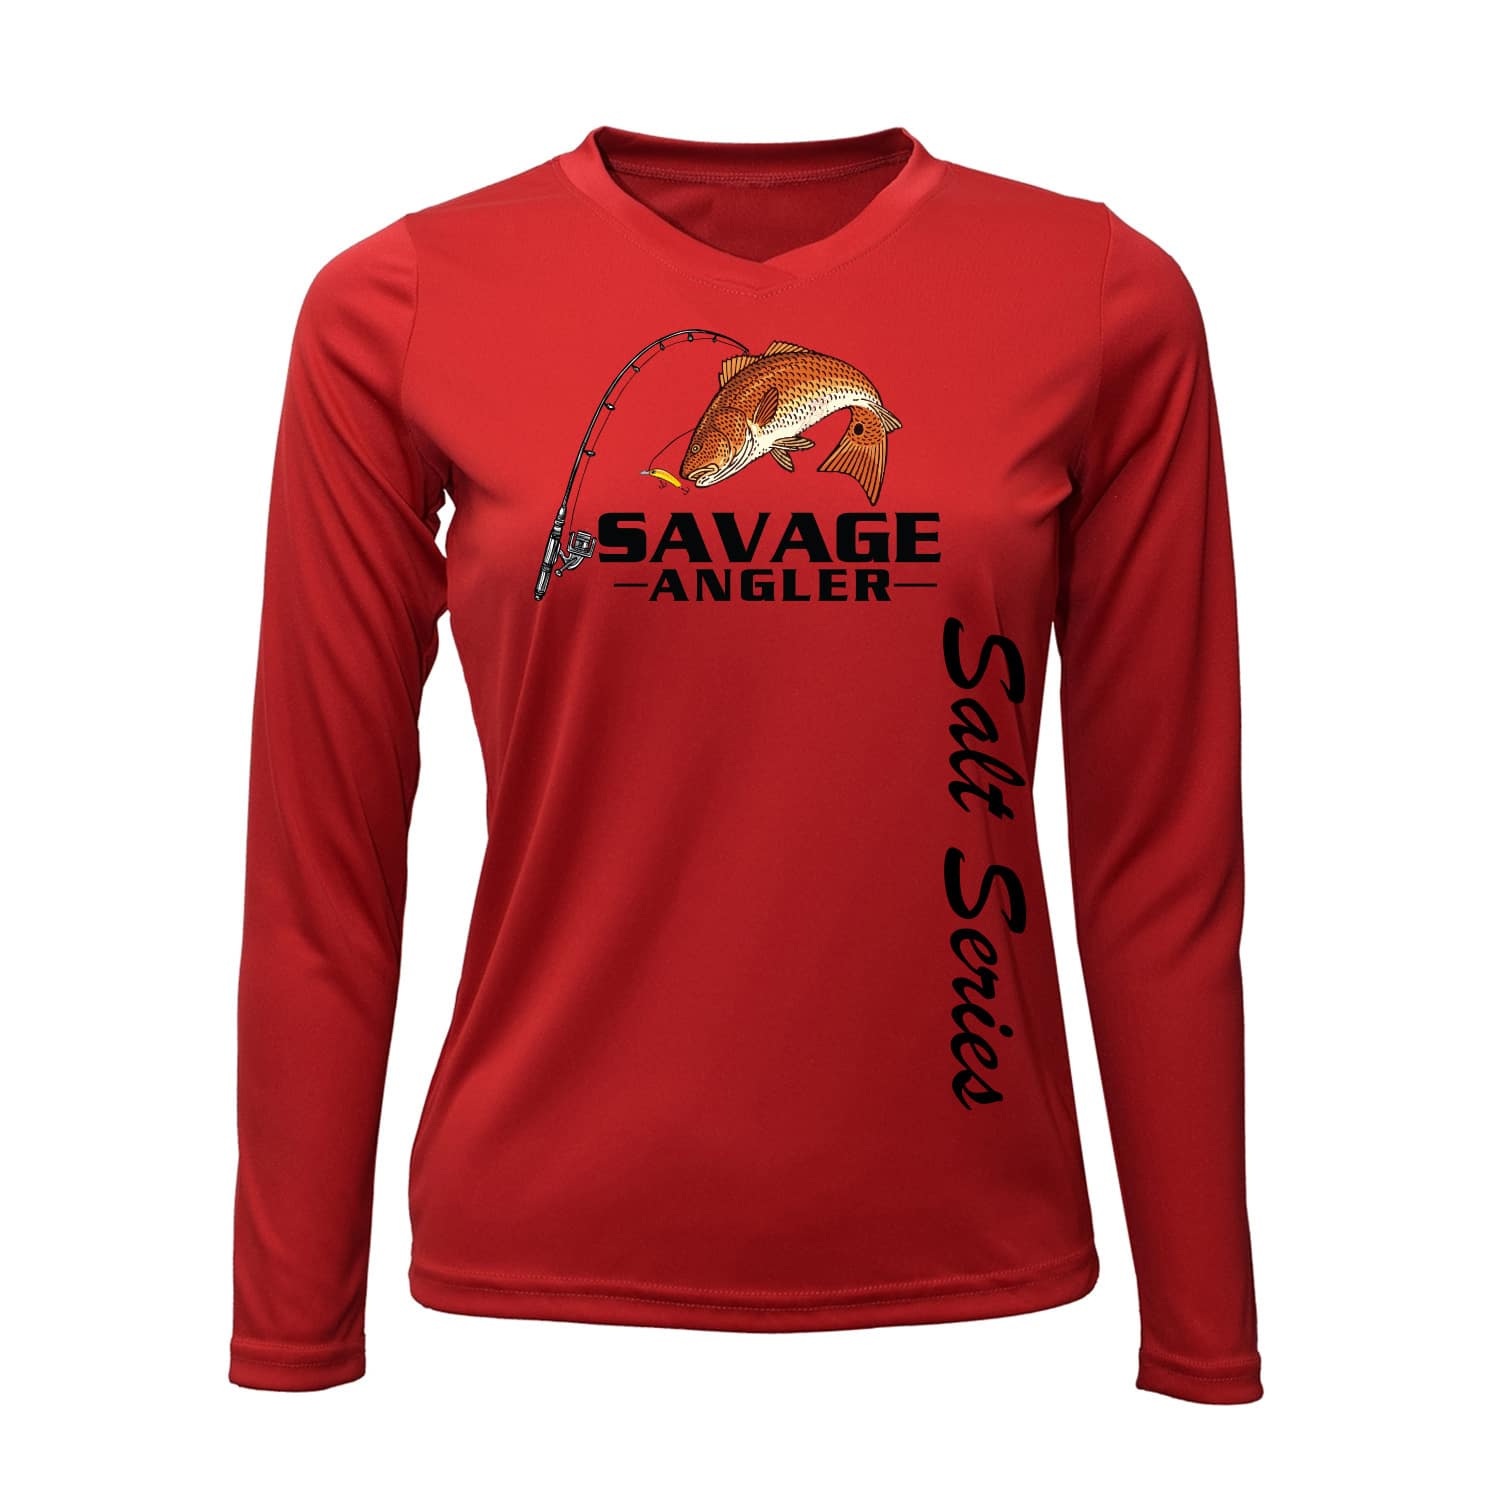 https://savageangler.com/wp-content/uploads/2021/03/Savage-Angler-Womens-Performance-Shirt_Red_Front-1.jpg